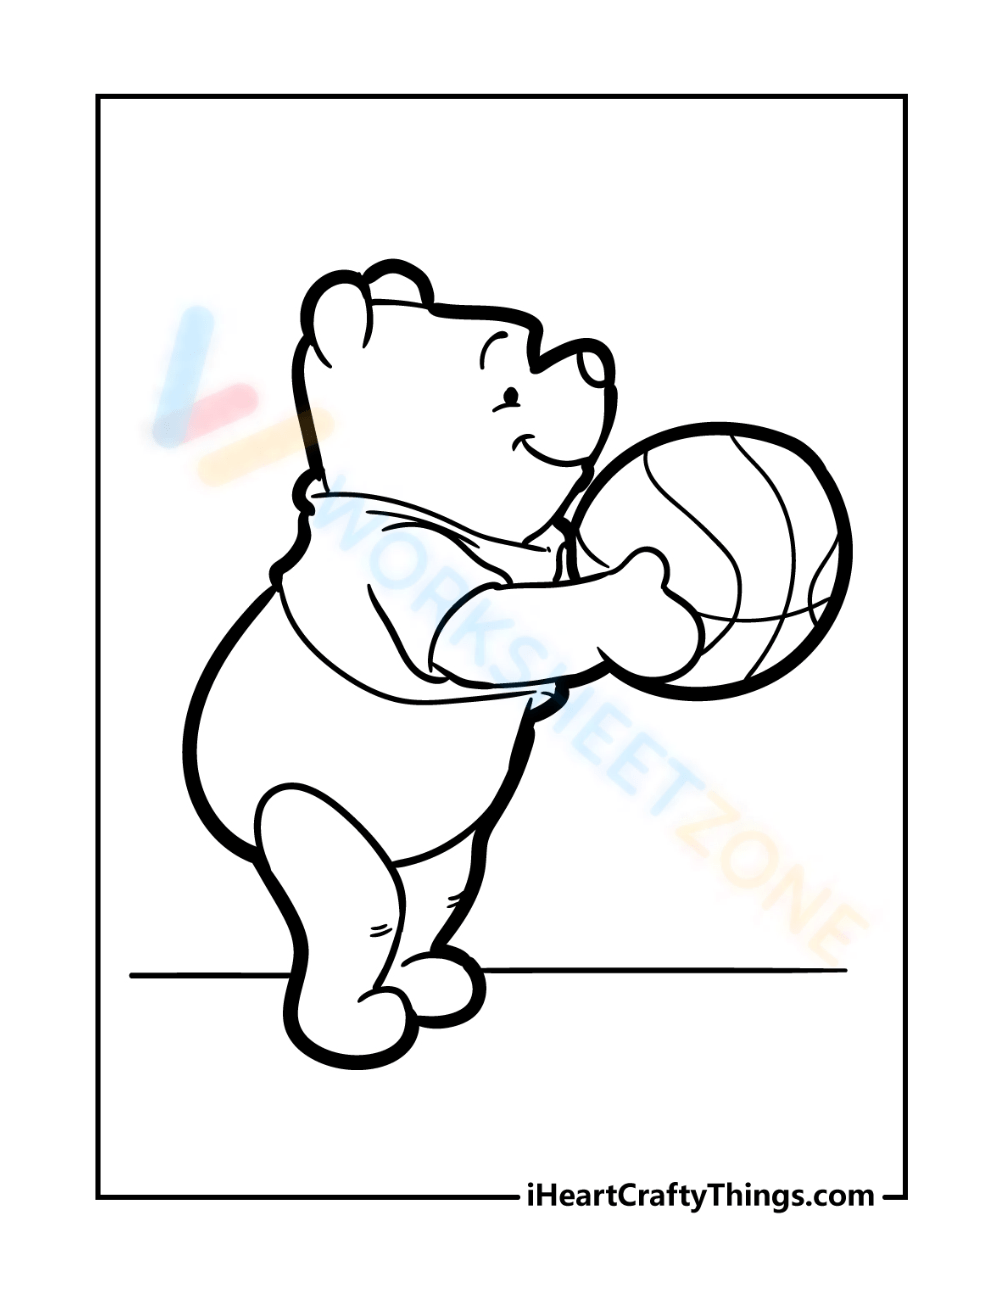 Winnie playing ball